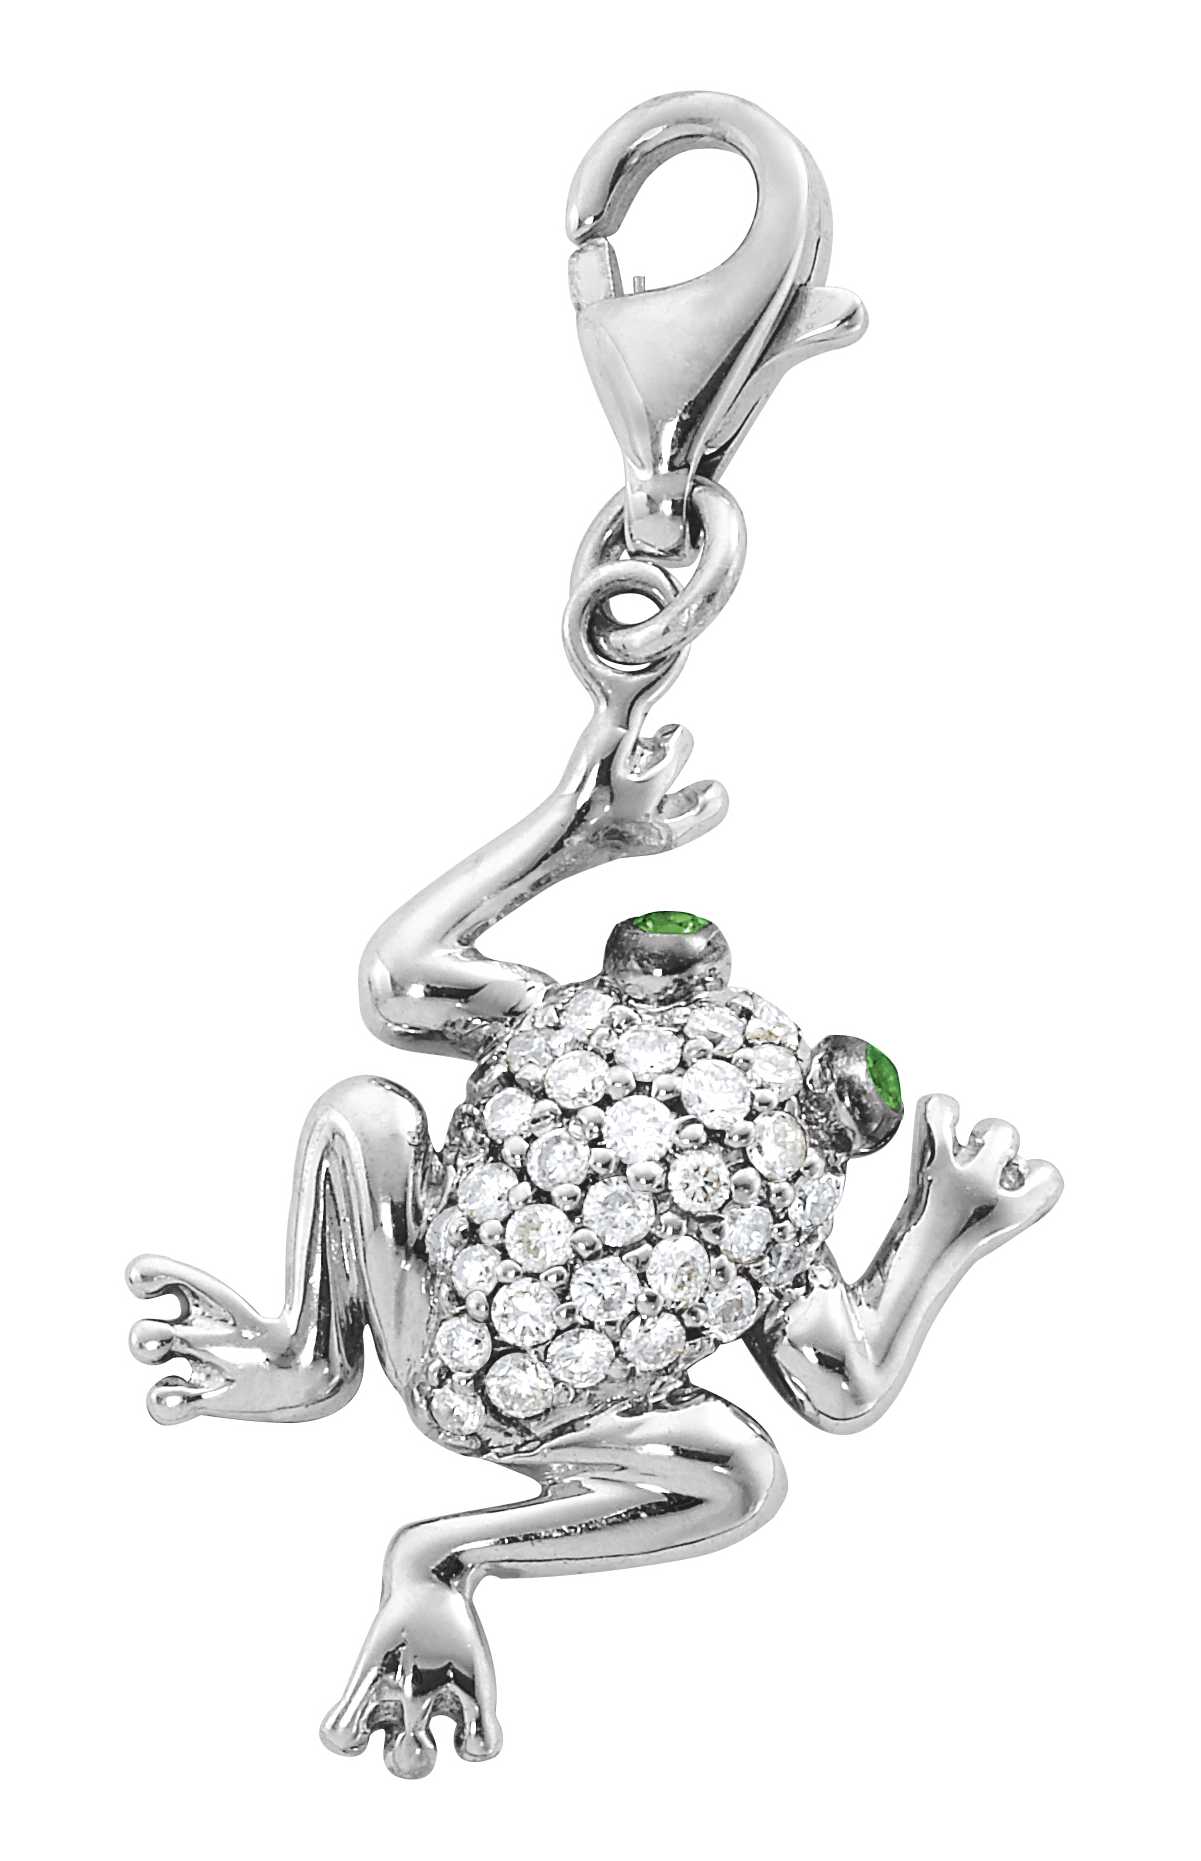 
14k White Frog Round 1.5 mm Green Garnet and Diamond Charm
